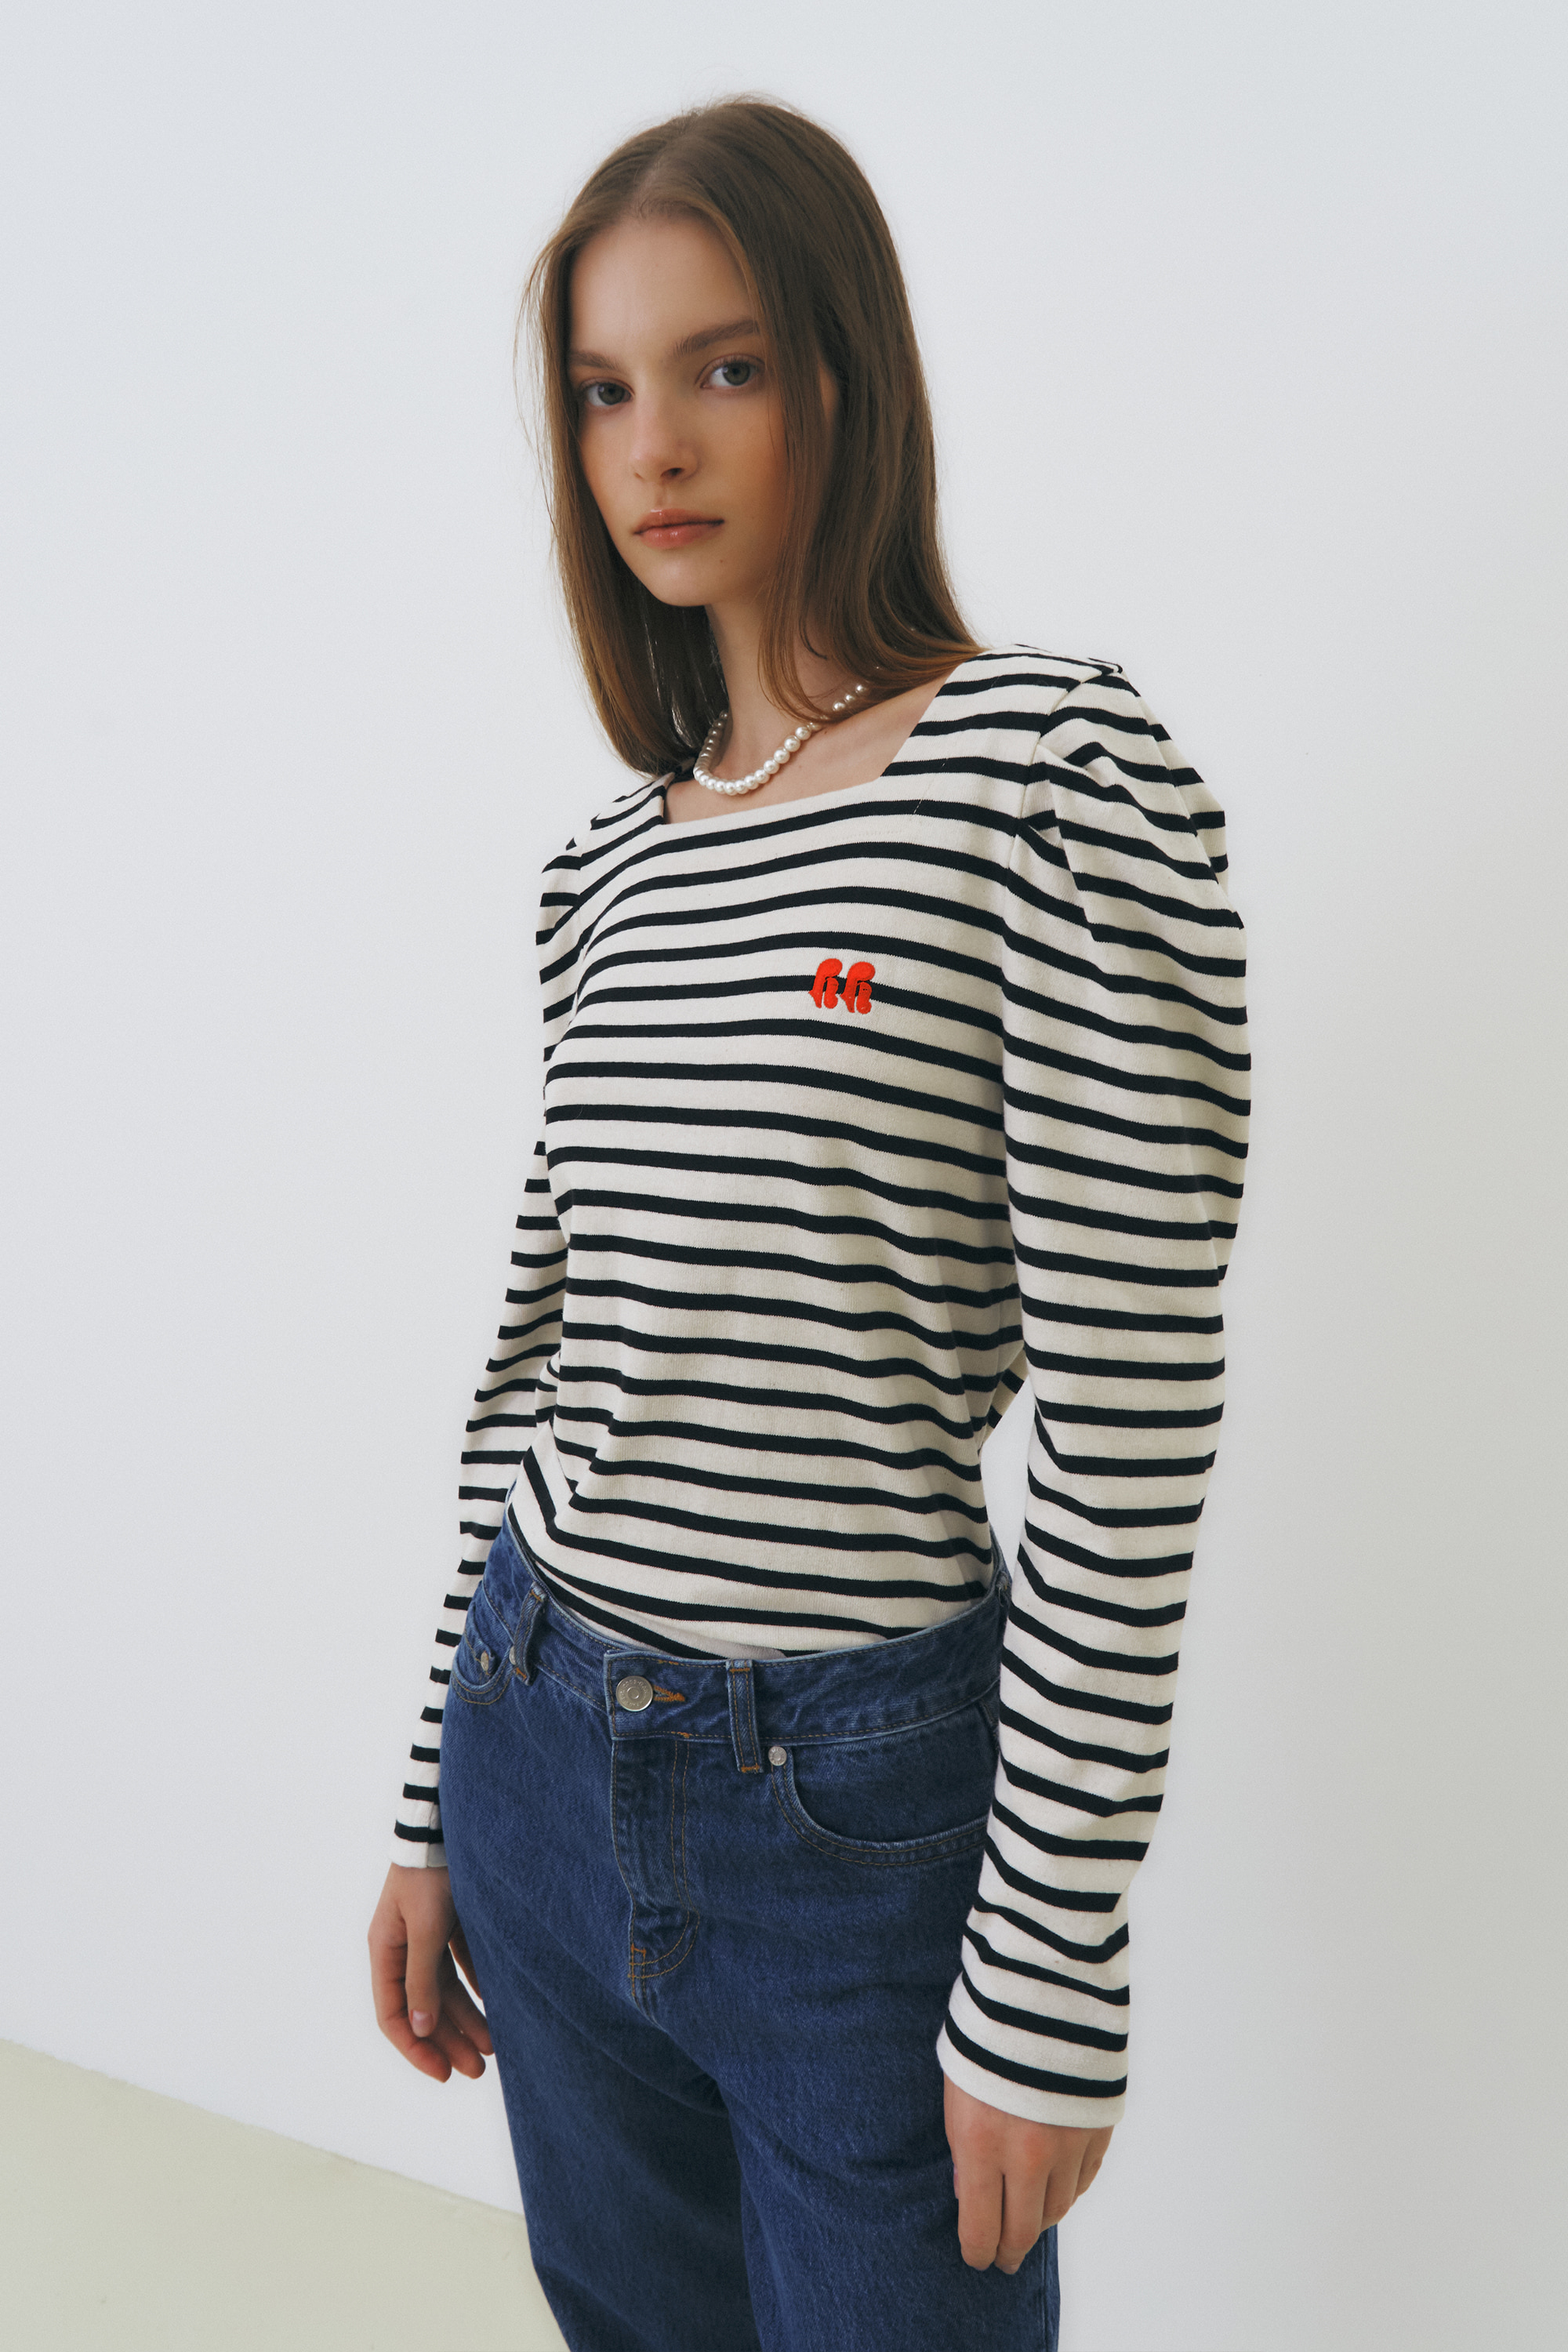 Square-neck volume sleeve t-shirts (stripe)